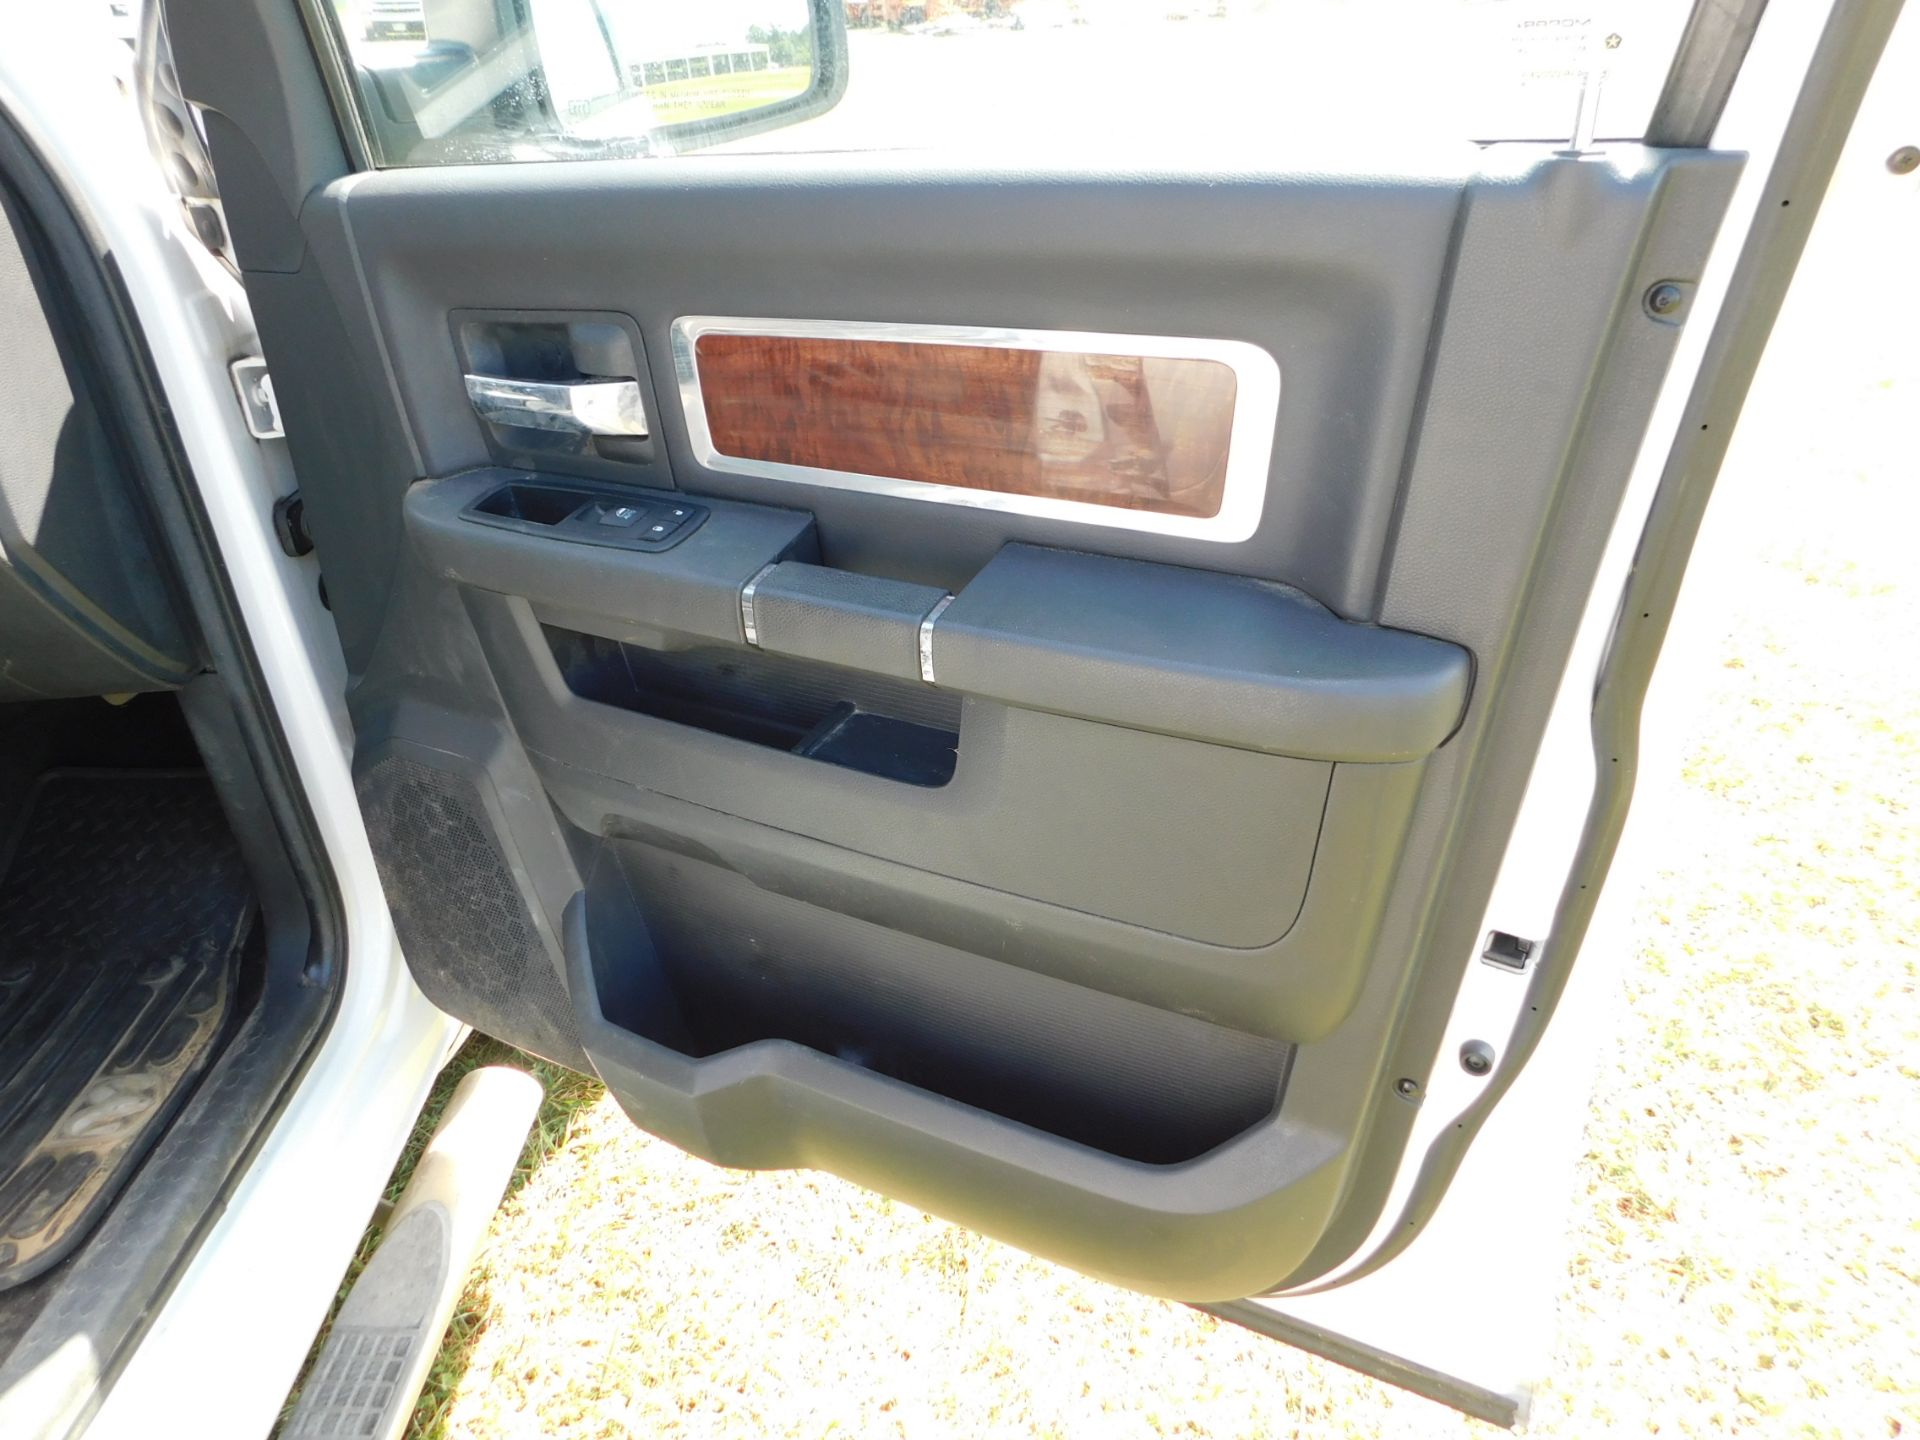 2012 Dodge Ram 1500 Pickup, Crew Cab, 6' Bed, Automatic, 4 WD, AM/FM,AC, PL, PW, Hemi 5.7 L - Image 43 of 53